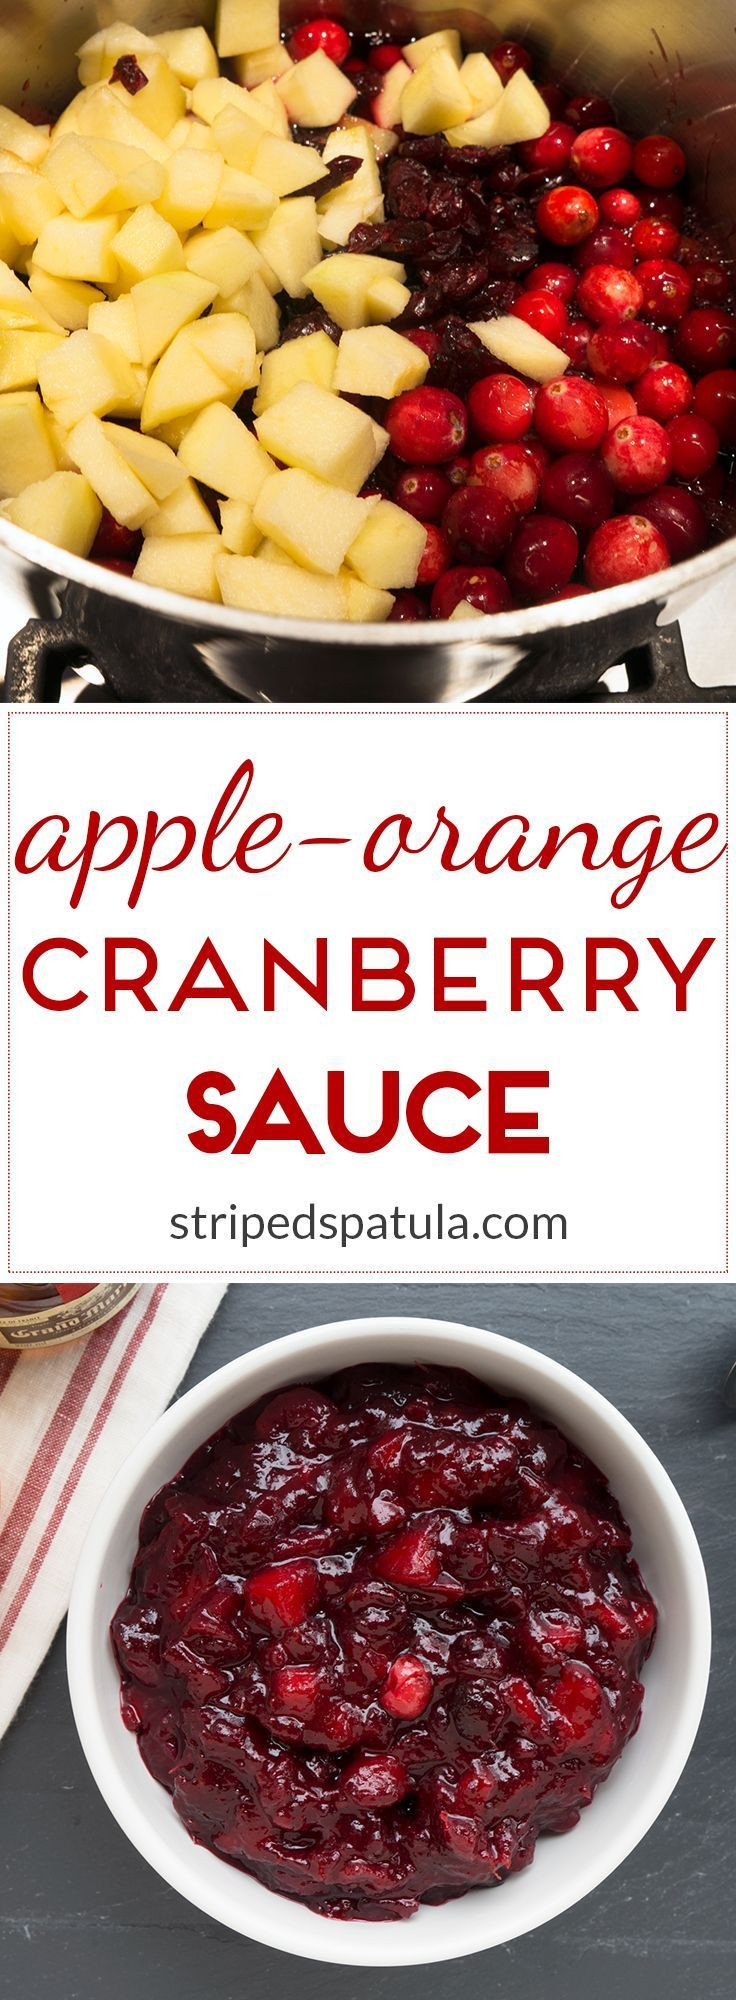 Cranberry Sauce Thanksgiving Side Dishes
 Apple Orange Cranberry Sauce Recipe